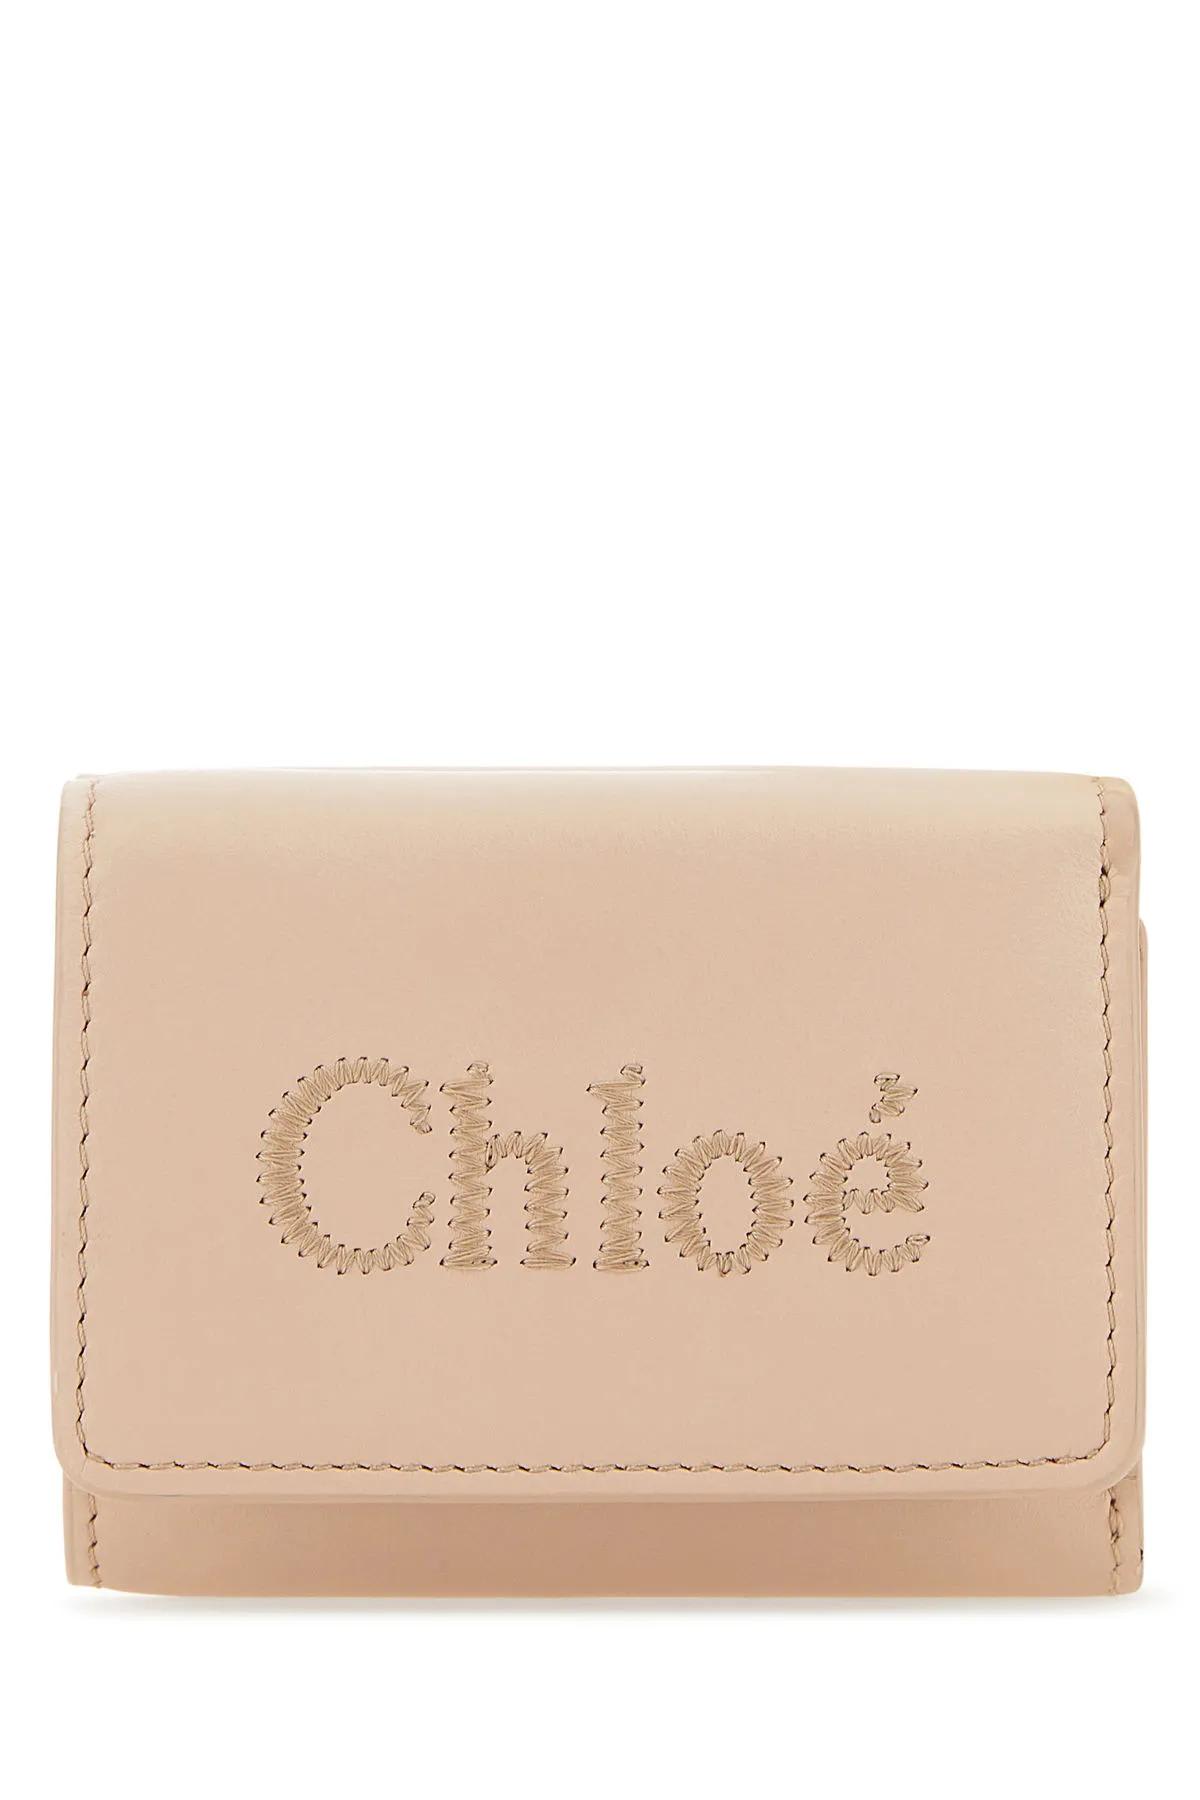 Chloé Powder Pink Leather Wallet